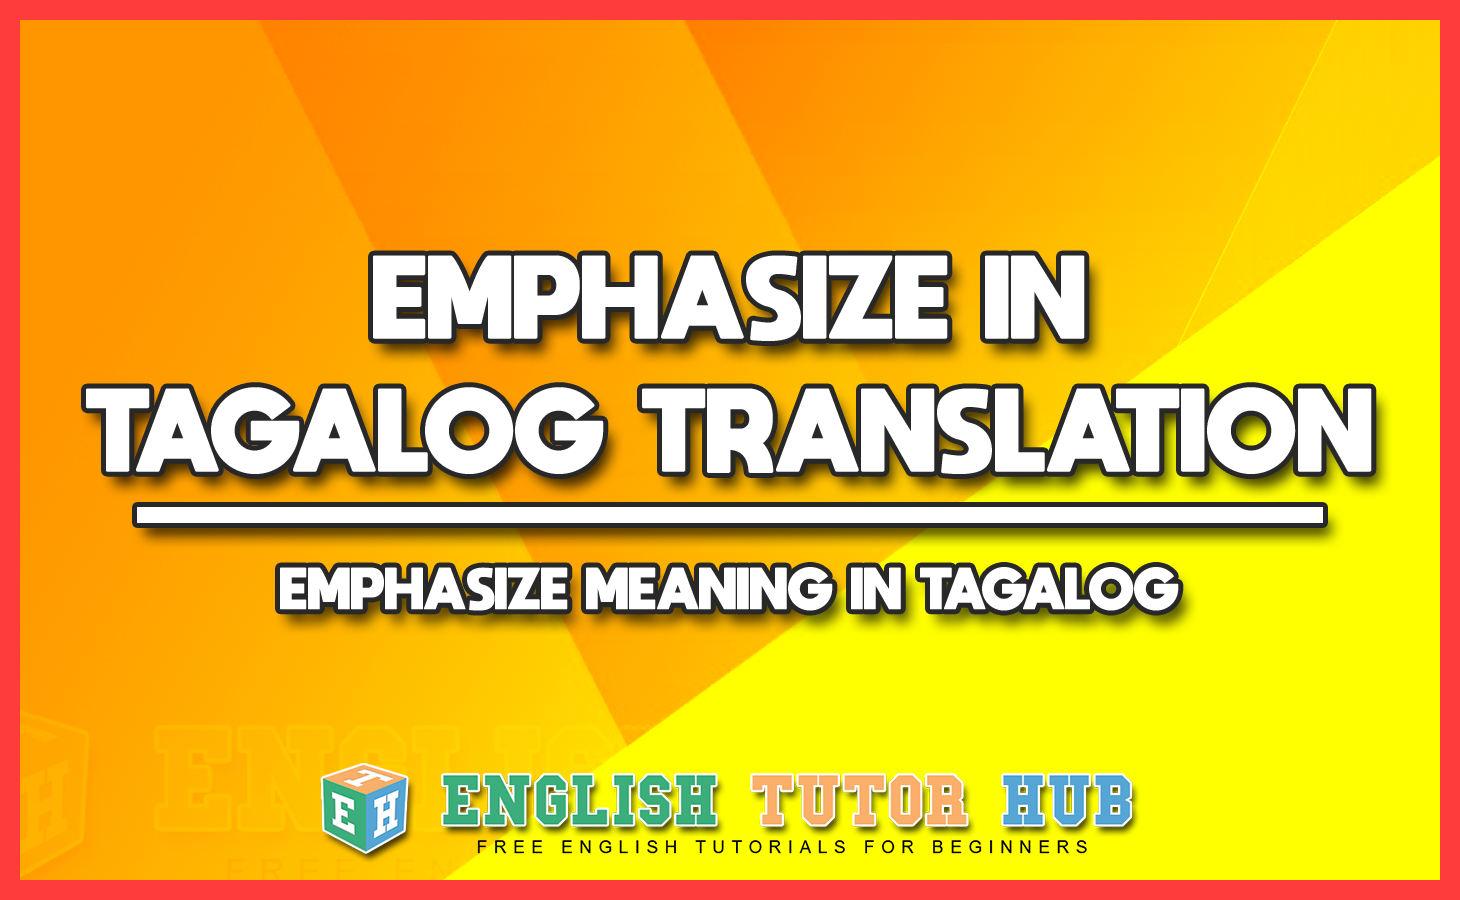 EMPHASIZE IN TAGALOG TRANSLATION - EMPHASIZE MEANING IN TAGALOG